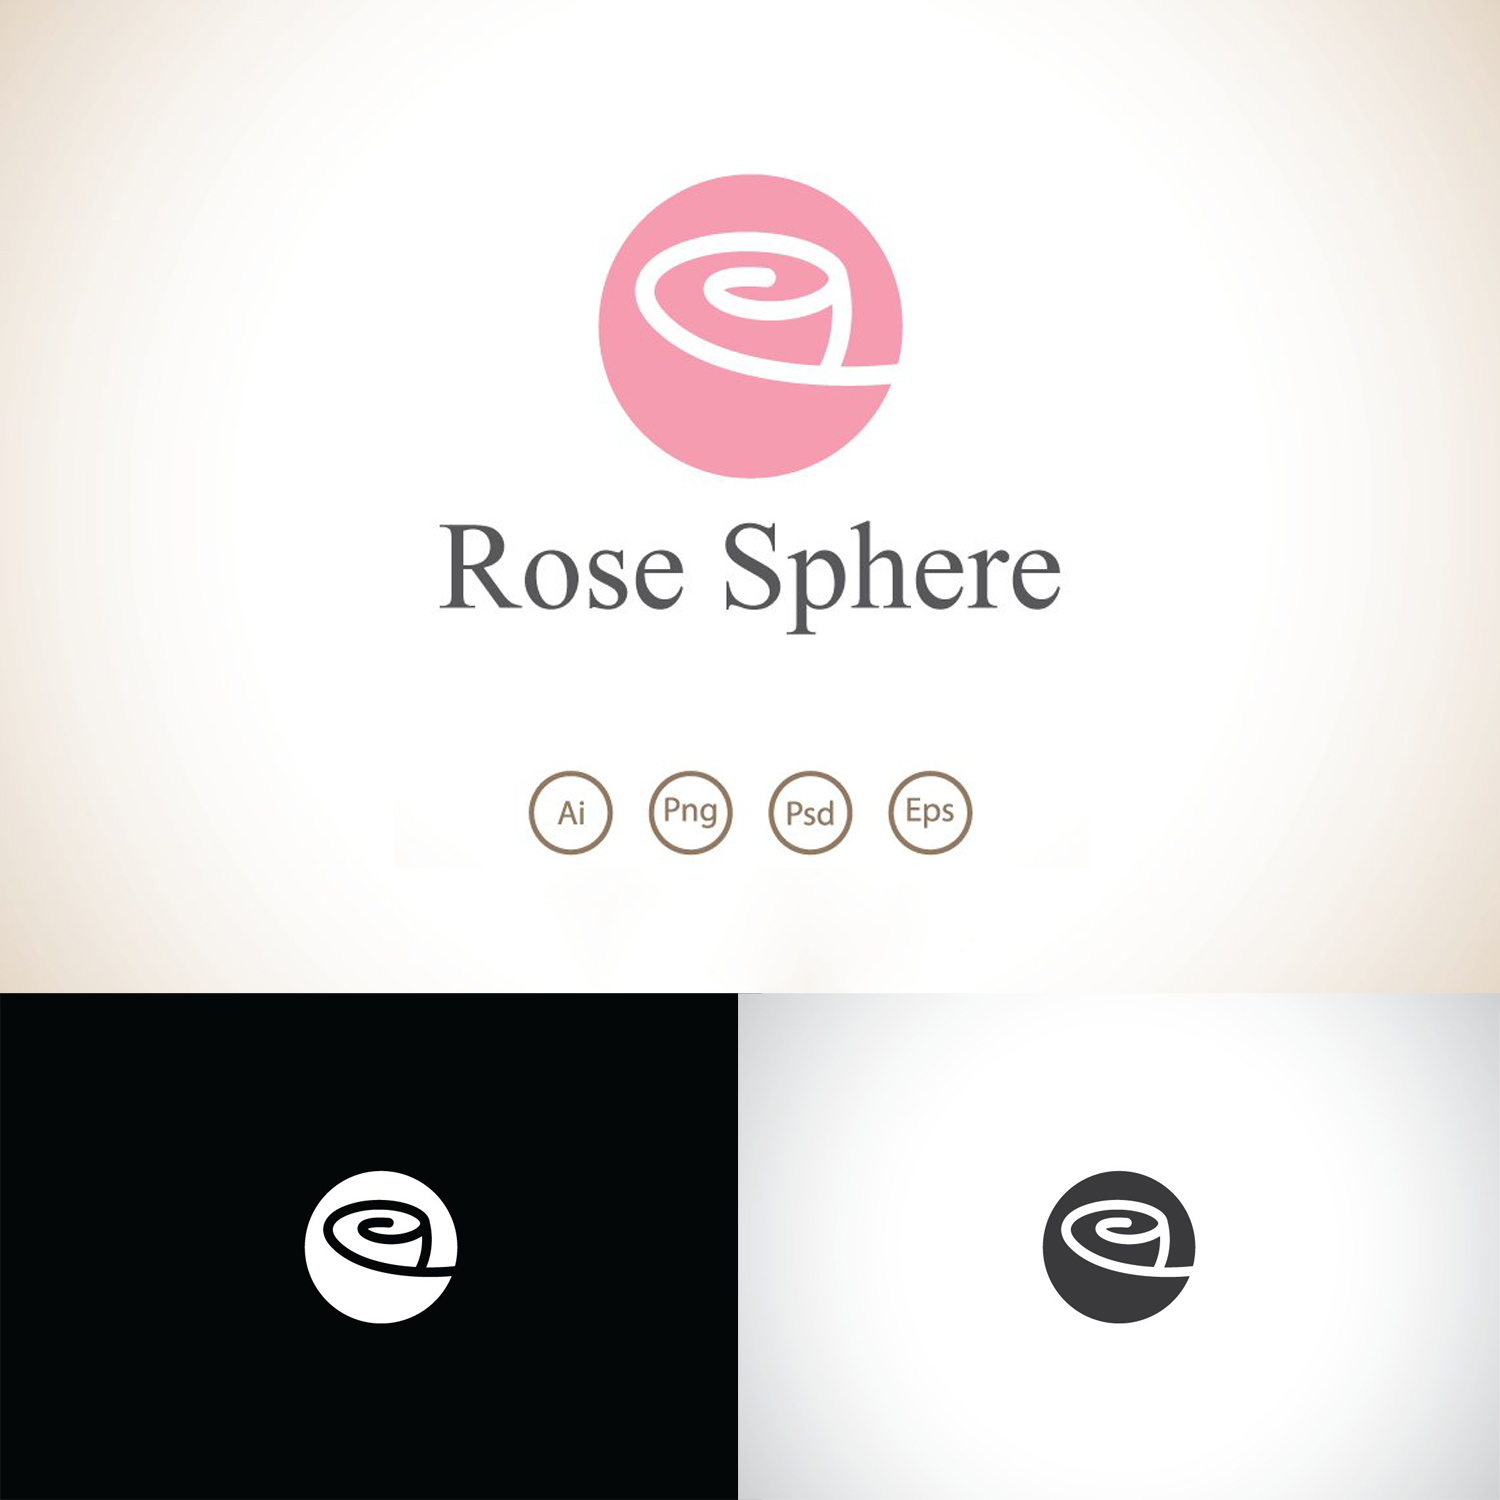 Prints of rose sphere logo template.